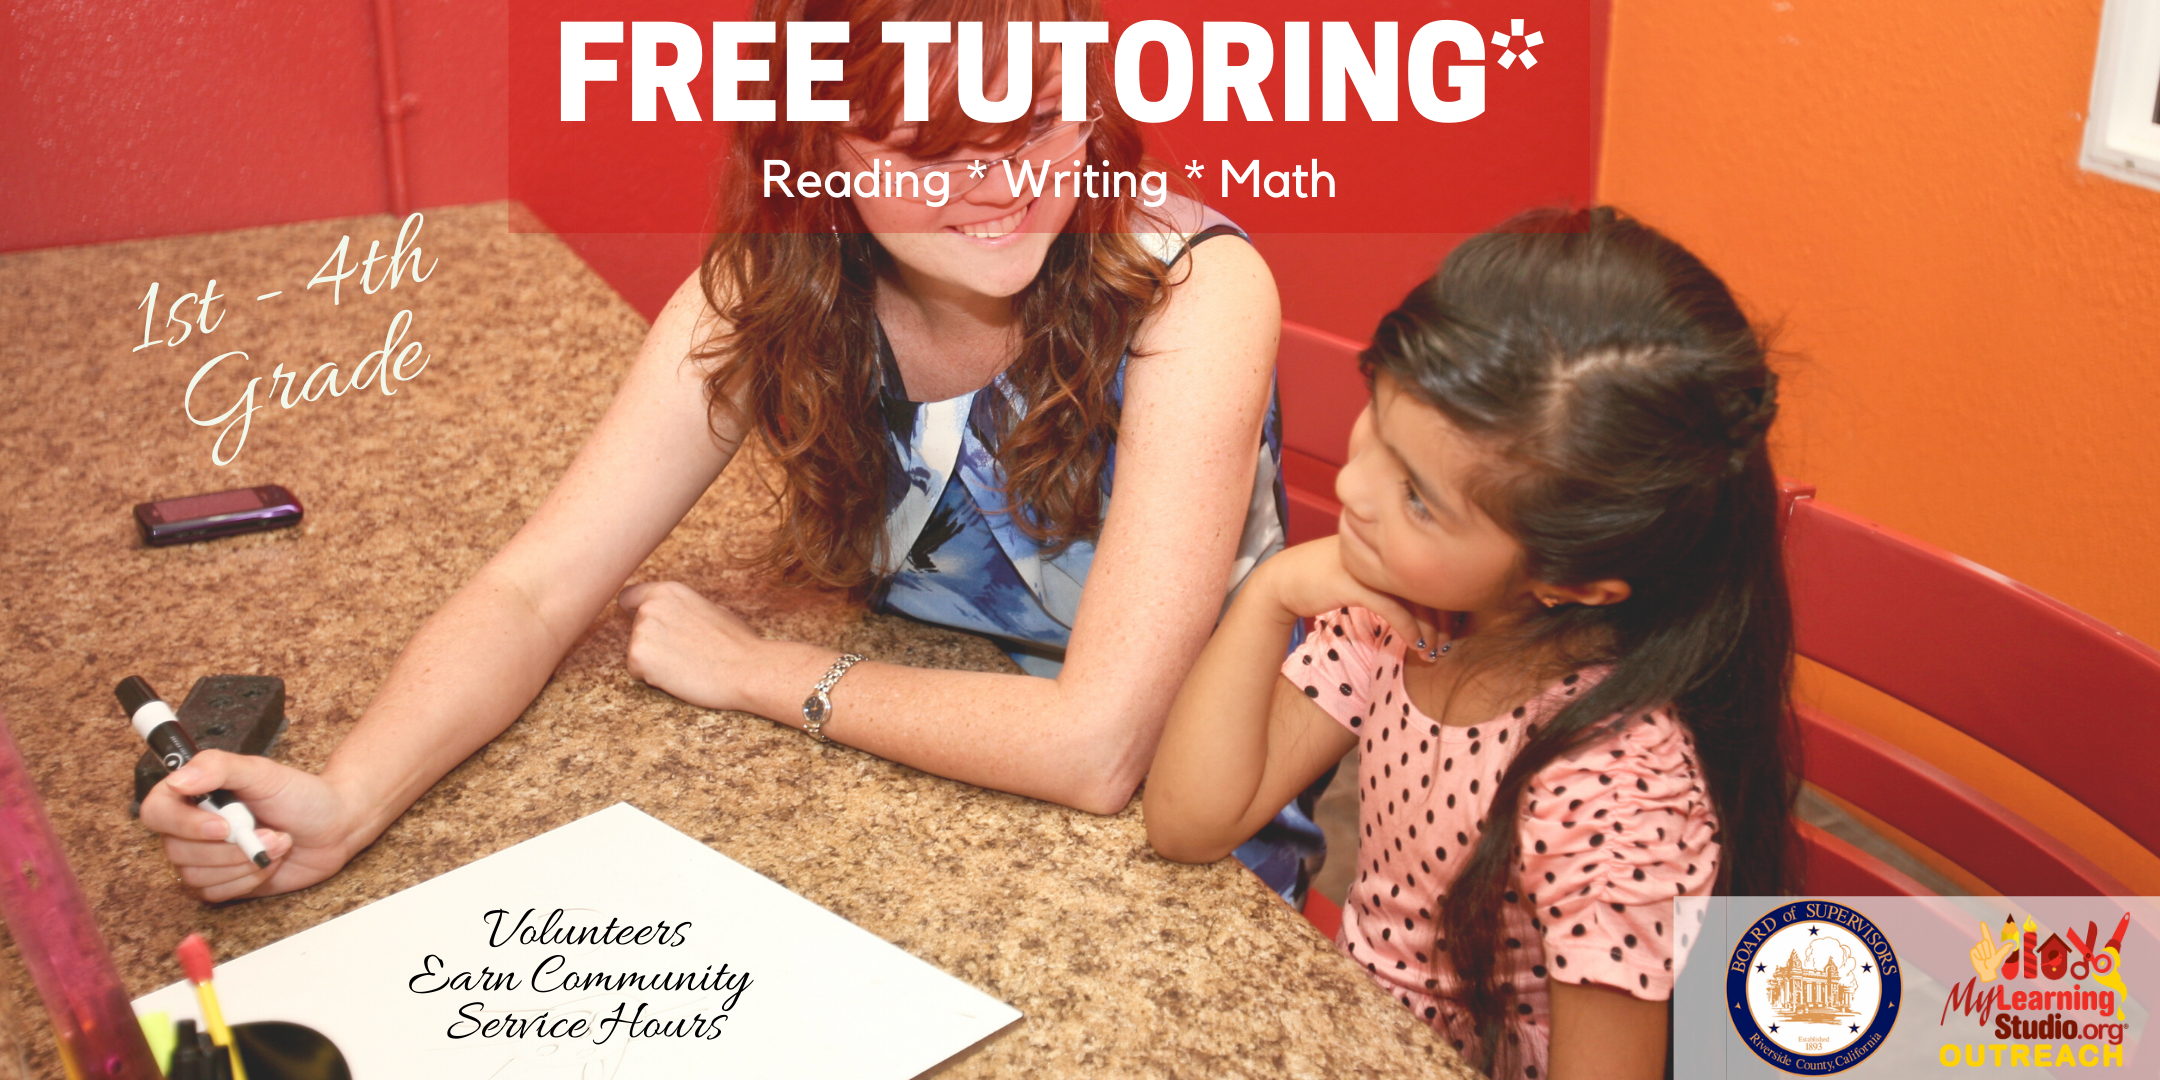 FREE Tutoring Reading, Writing, & Fluency (1st-4th grades)